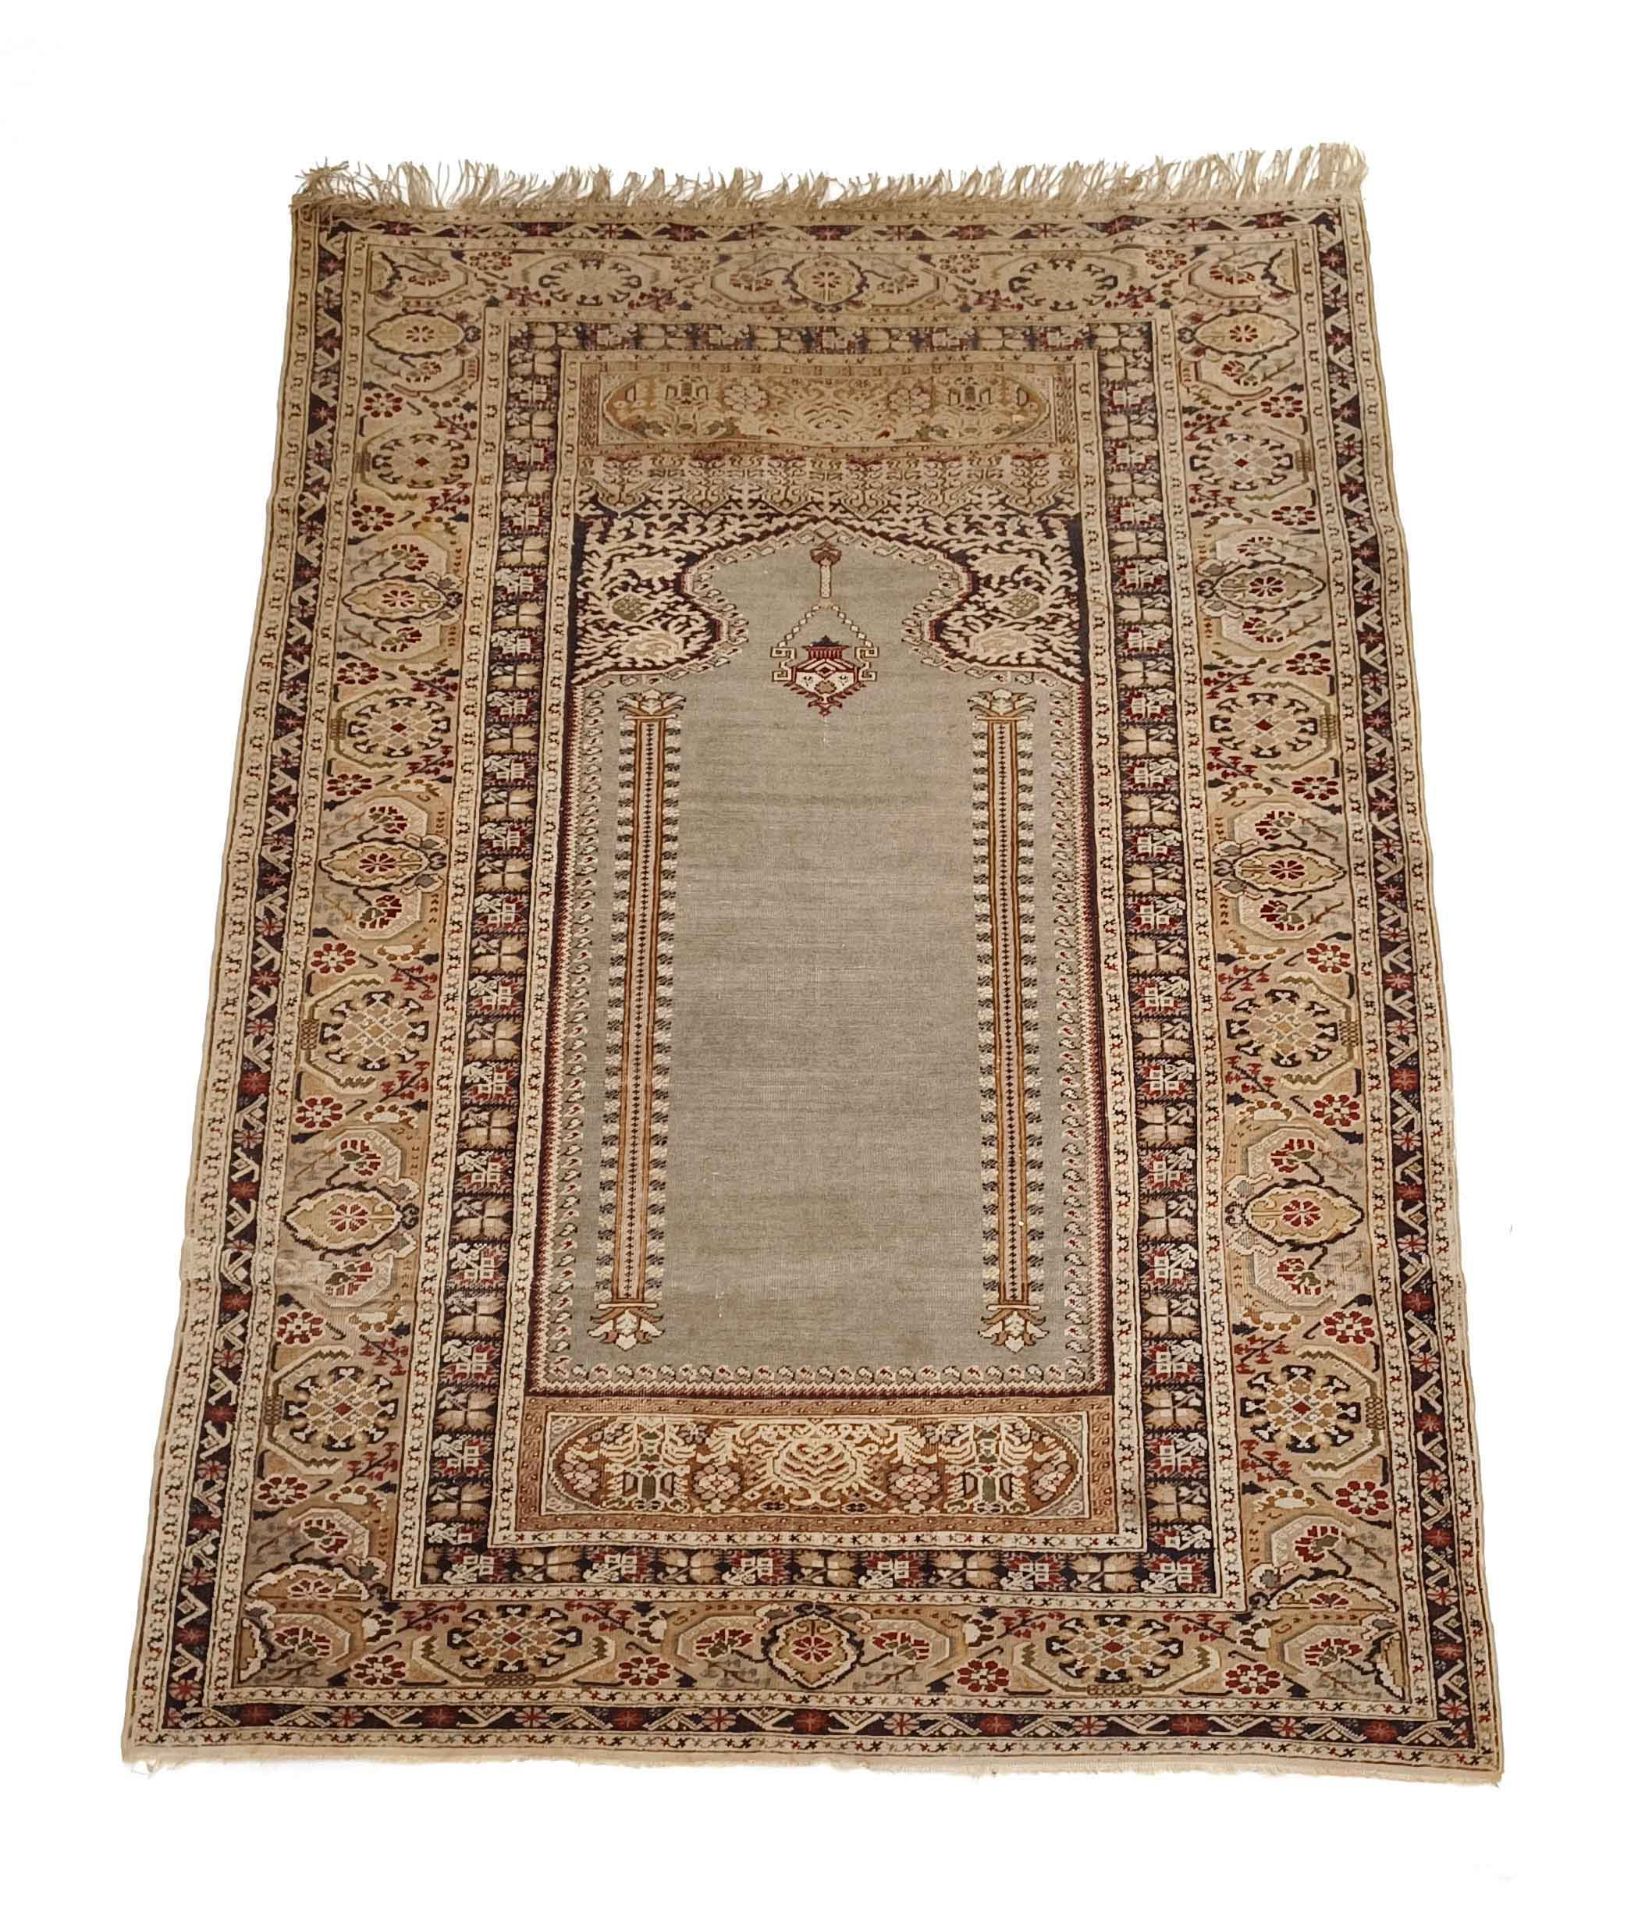 Teppich, Carpet, Rug, Türkeri, prayer, lowered pile with worn areas, fringes worn on one side, 170 x